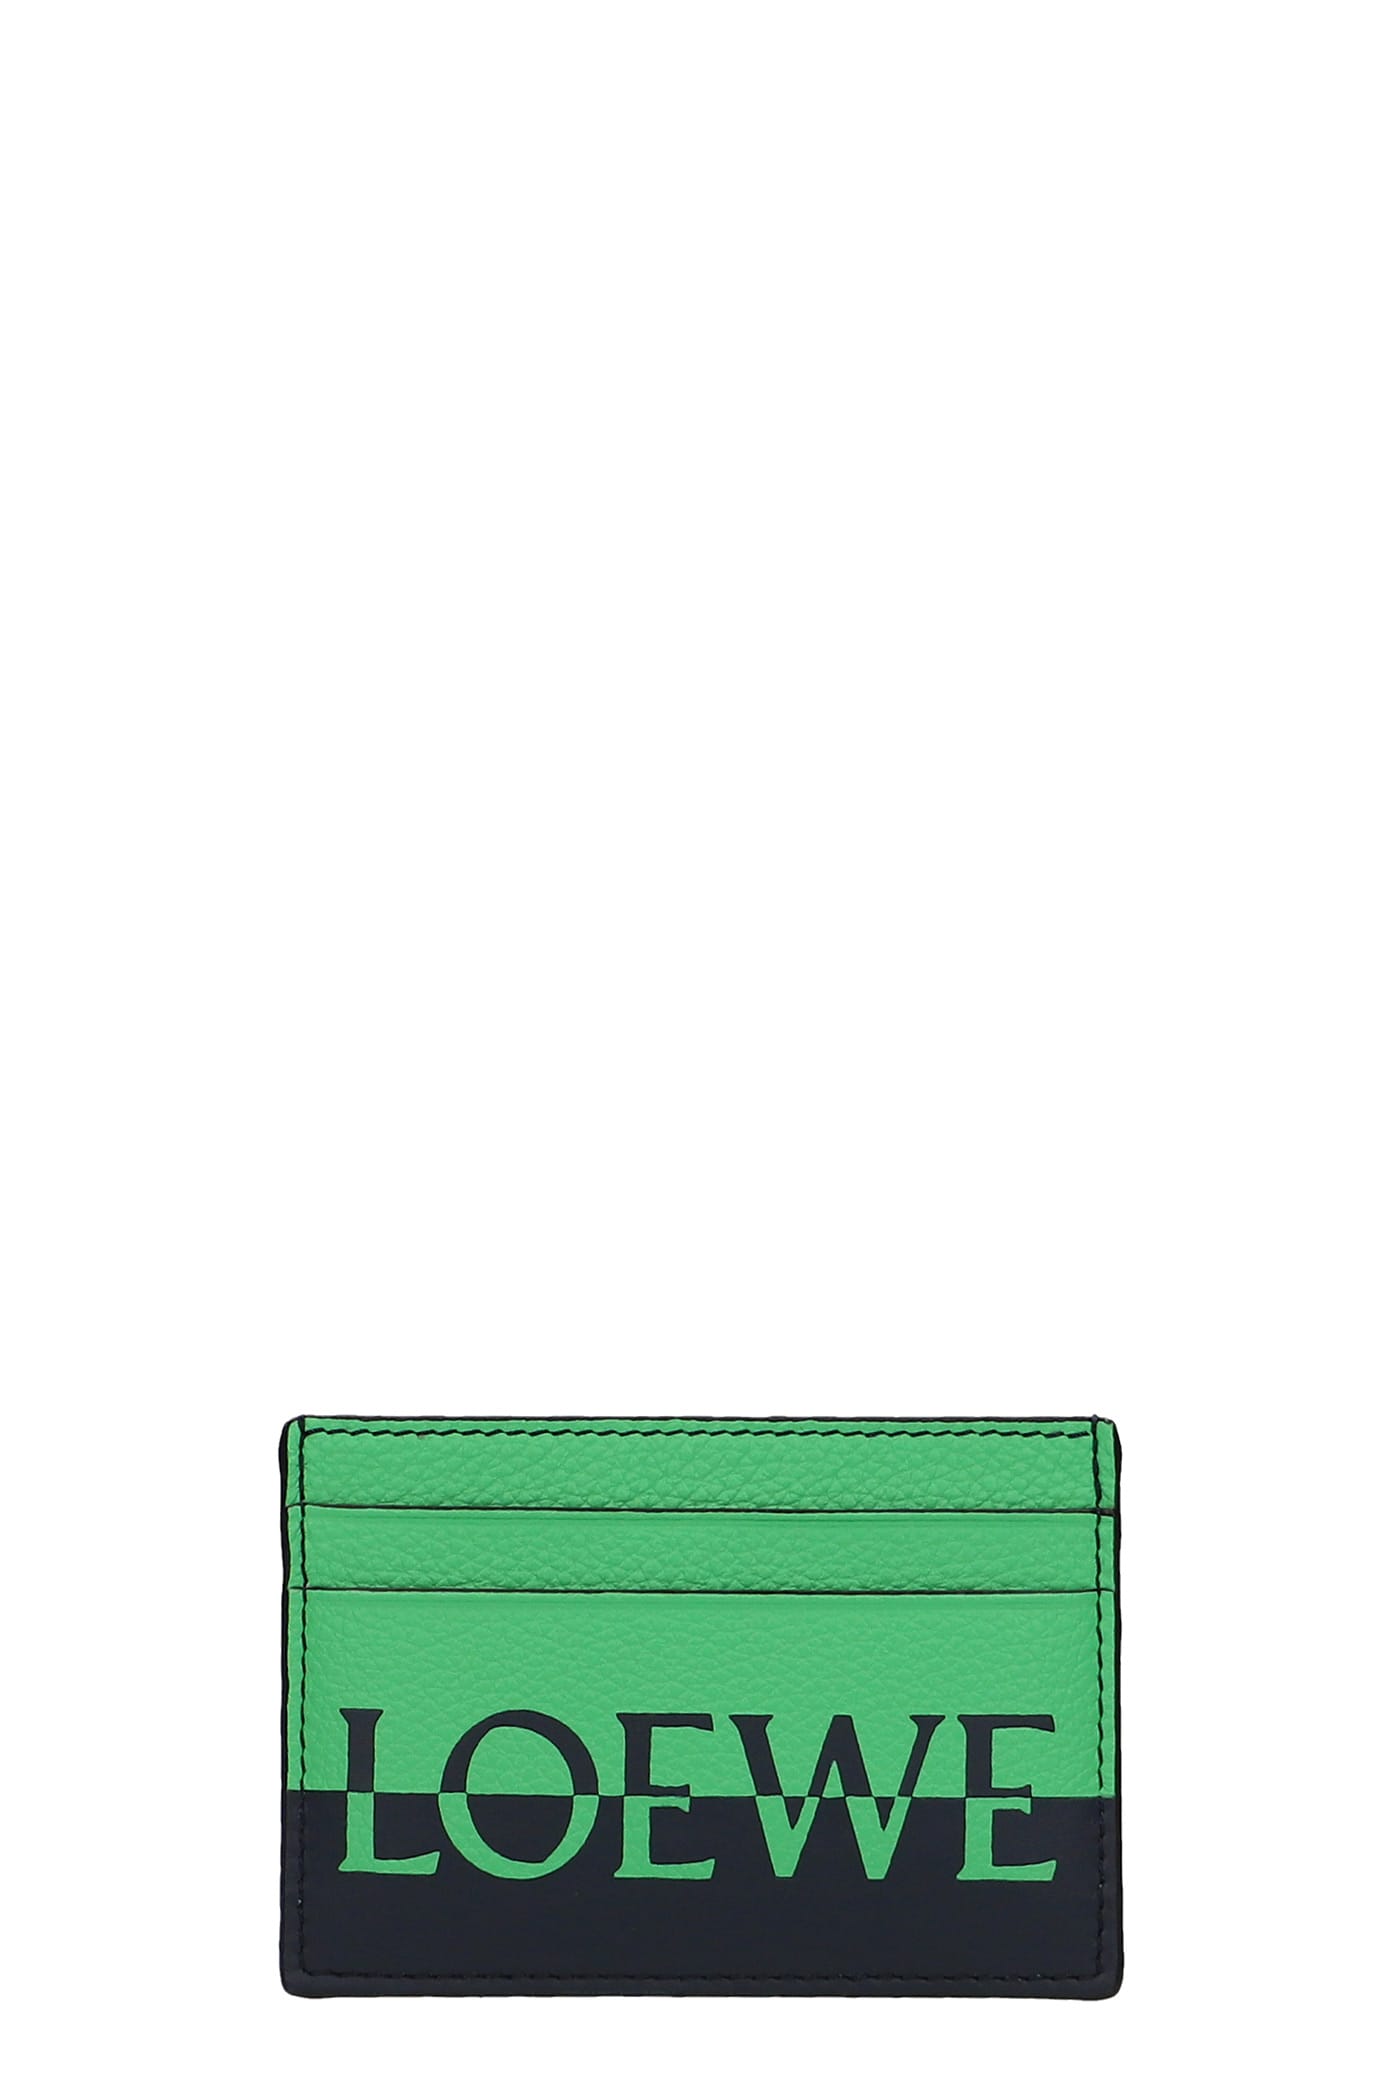 Loewe Wallet In Green Leather